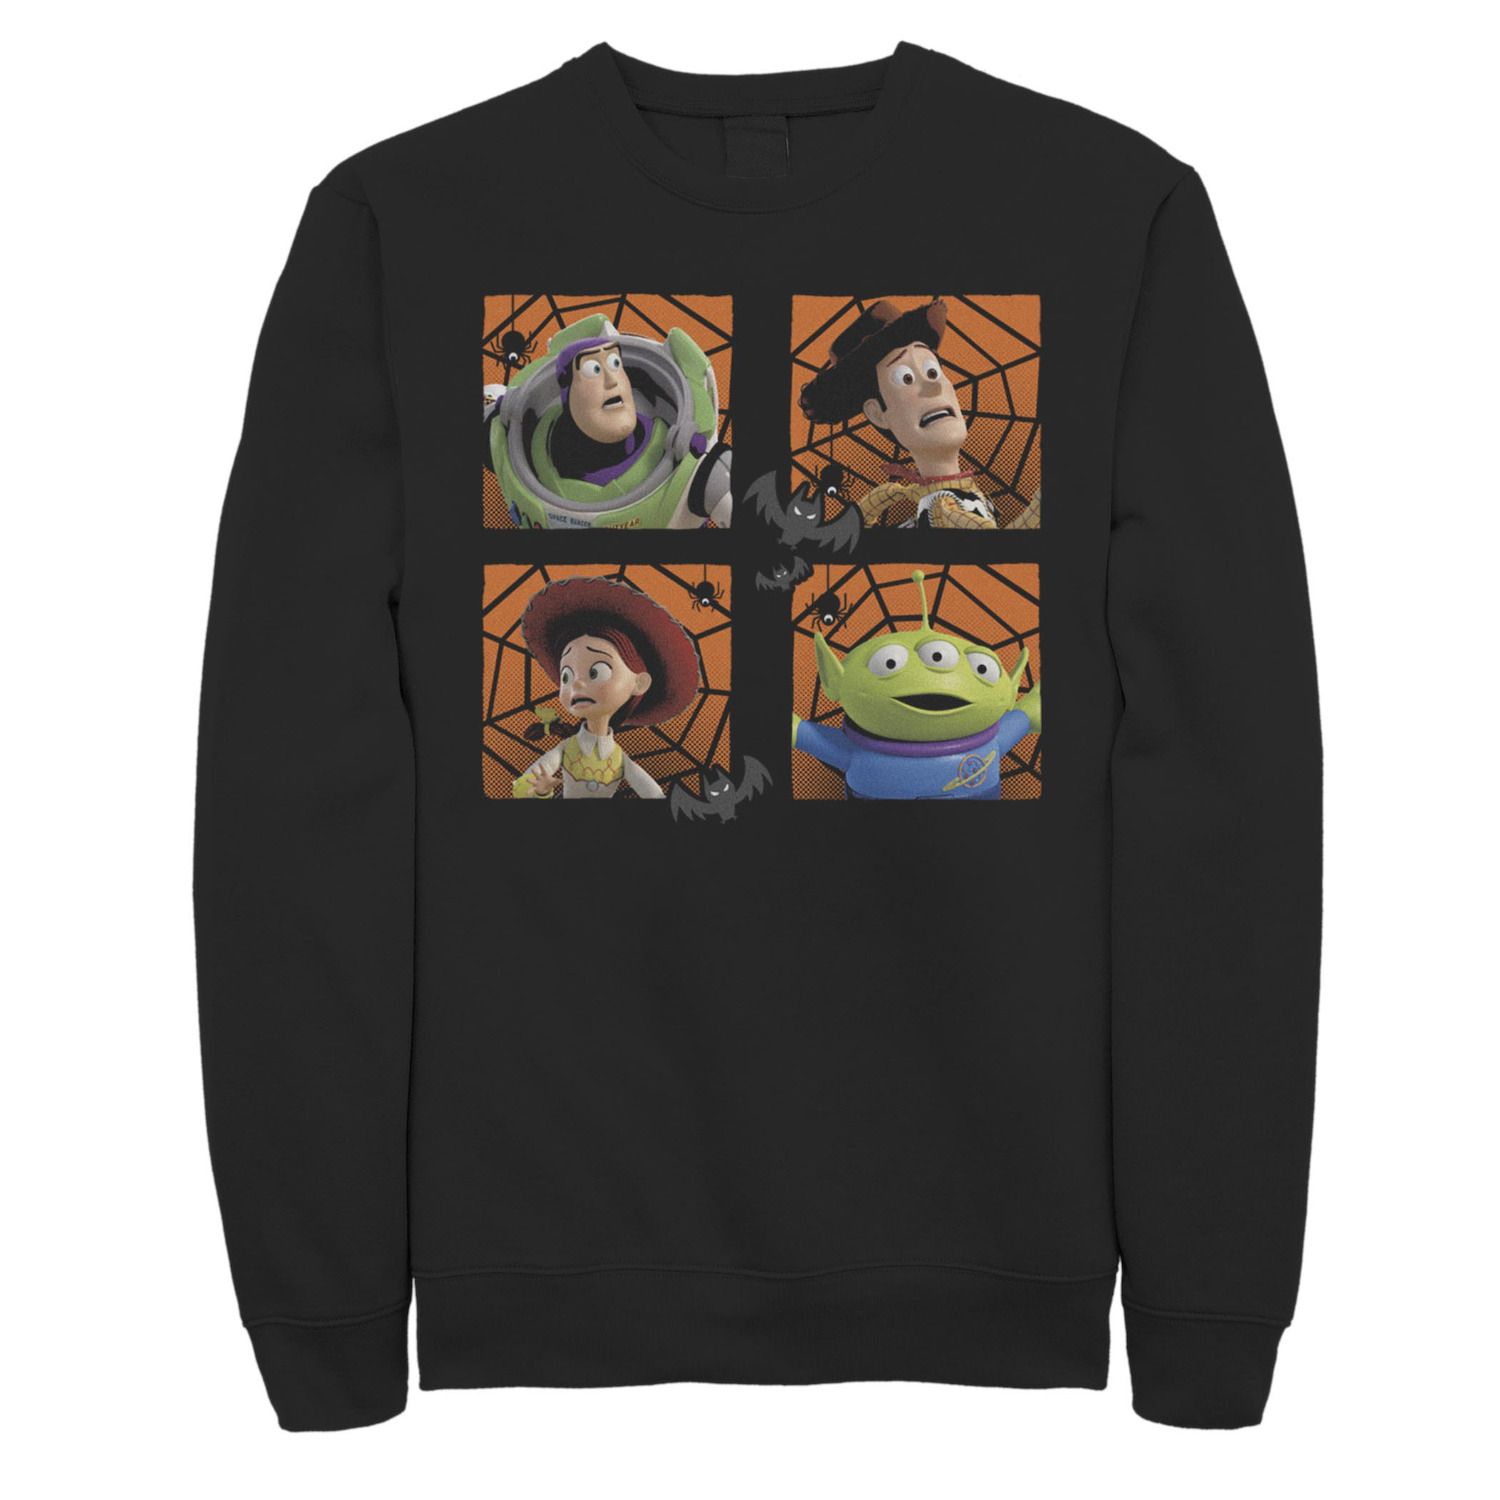 Image for Disney / Pixar Men's Toy Story Halloween Character Squares Sweatshirt at Kohl's.